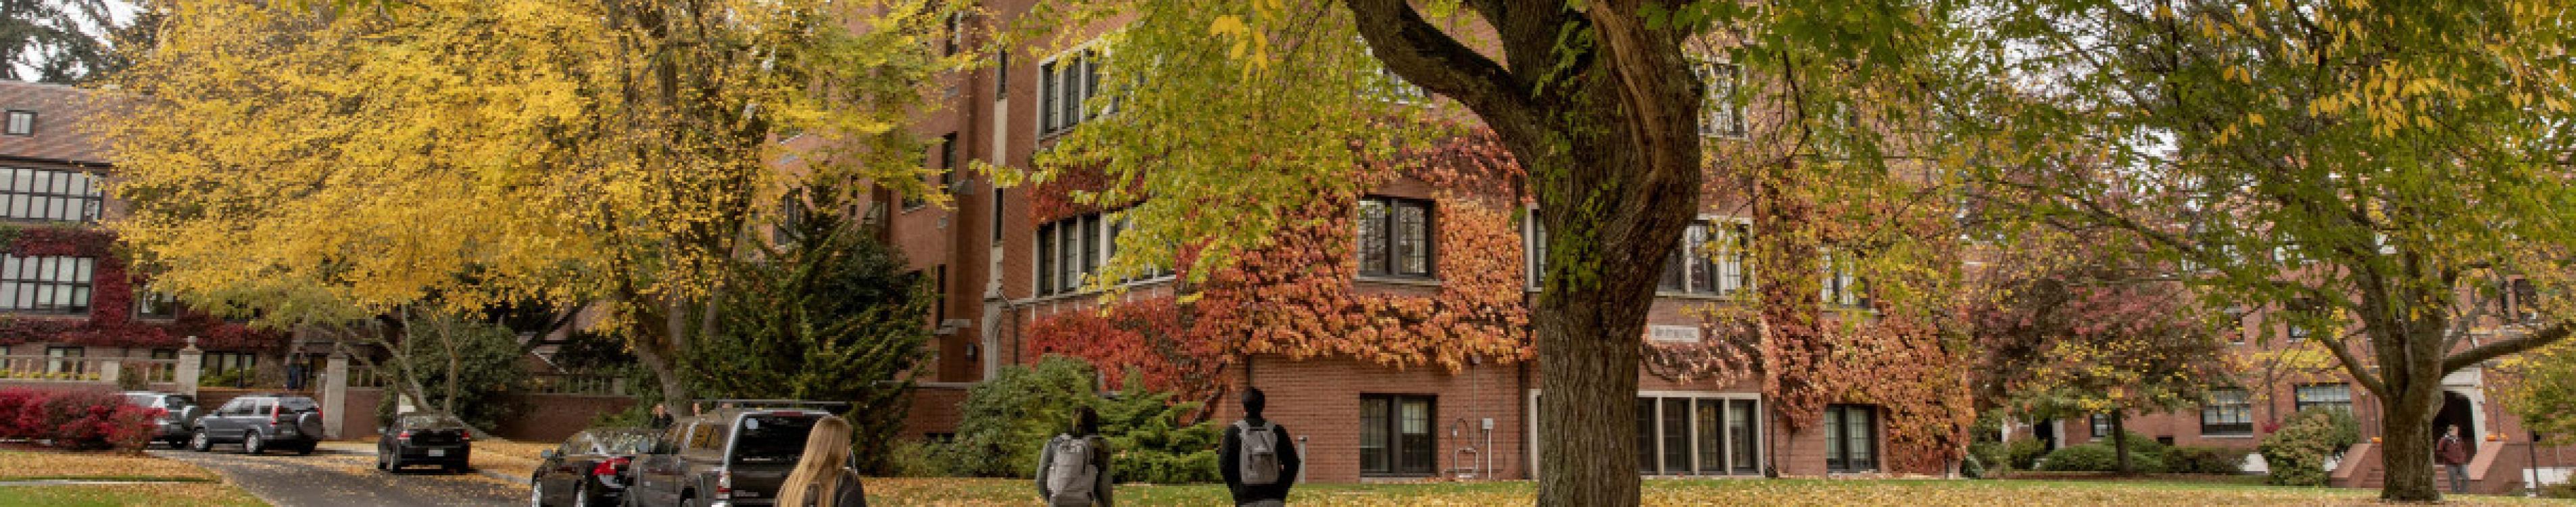 People walking through campus during Fall season colors